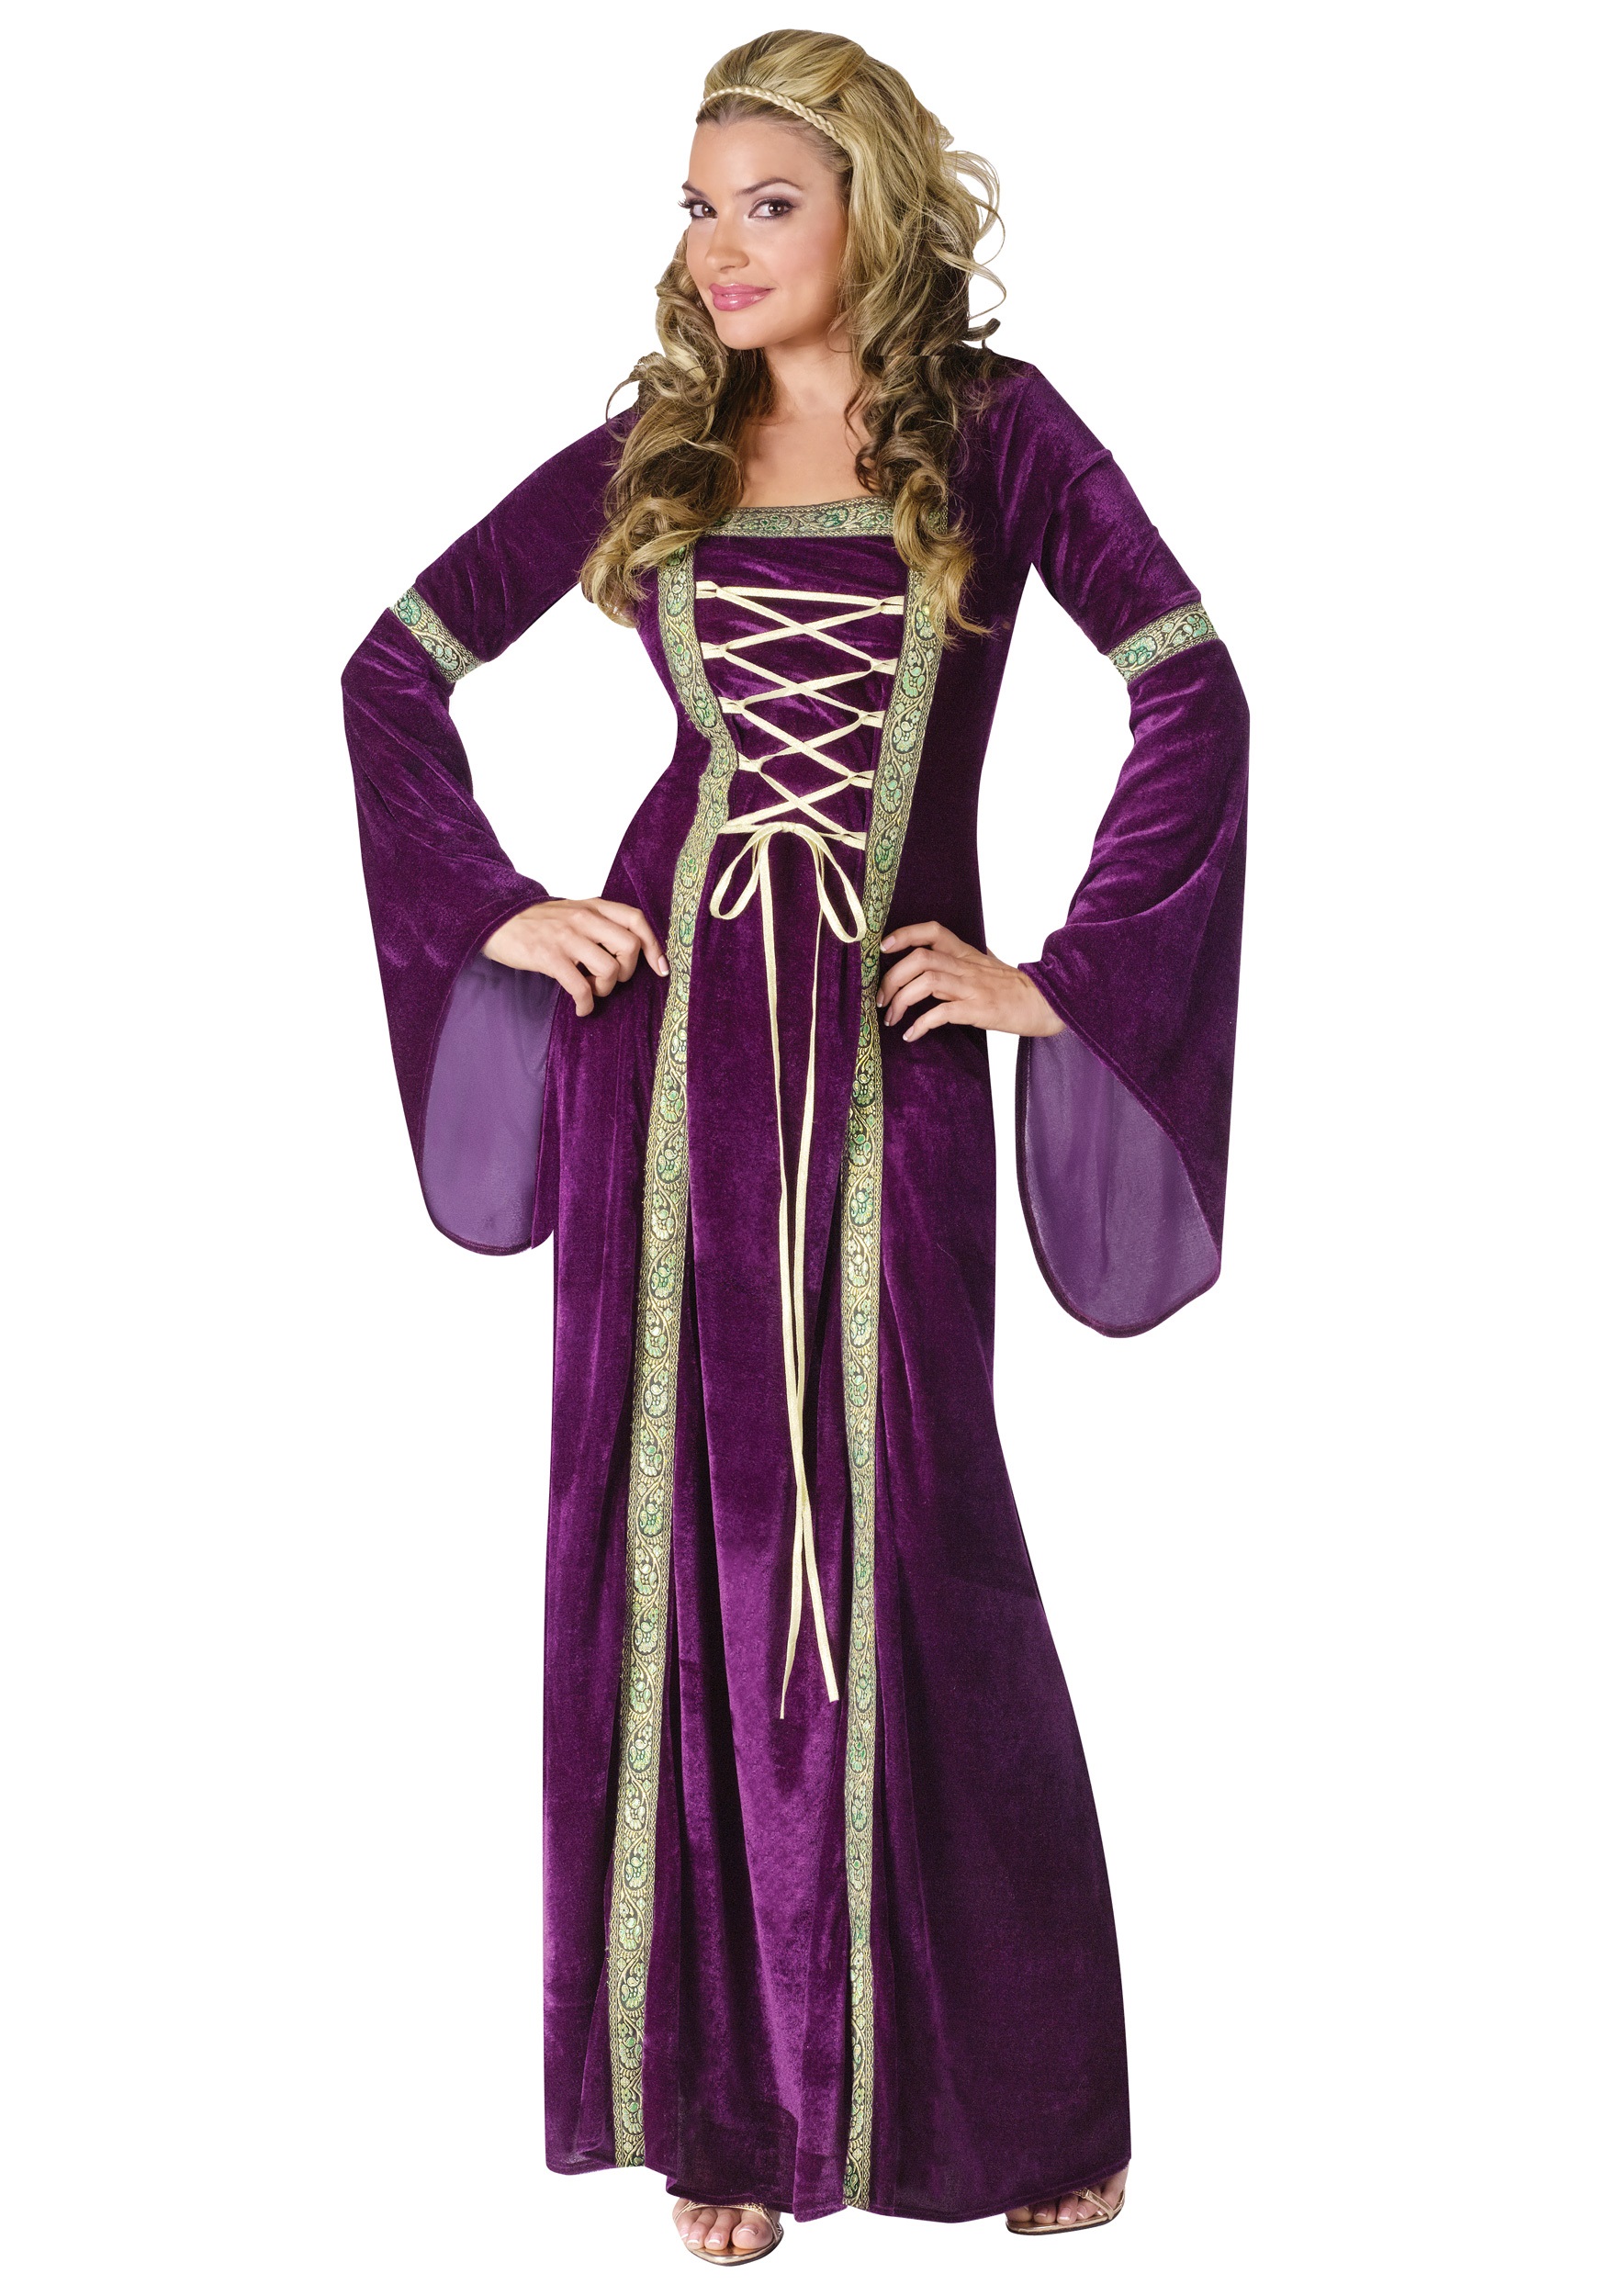 Photos - Fancy Dress Fun World Renaissance Lady Costume for Women Purple FU110014